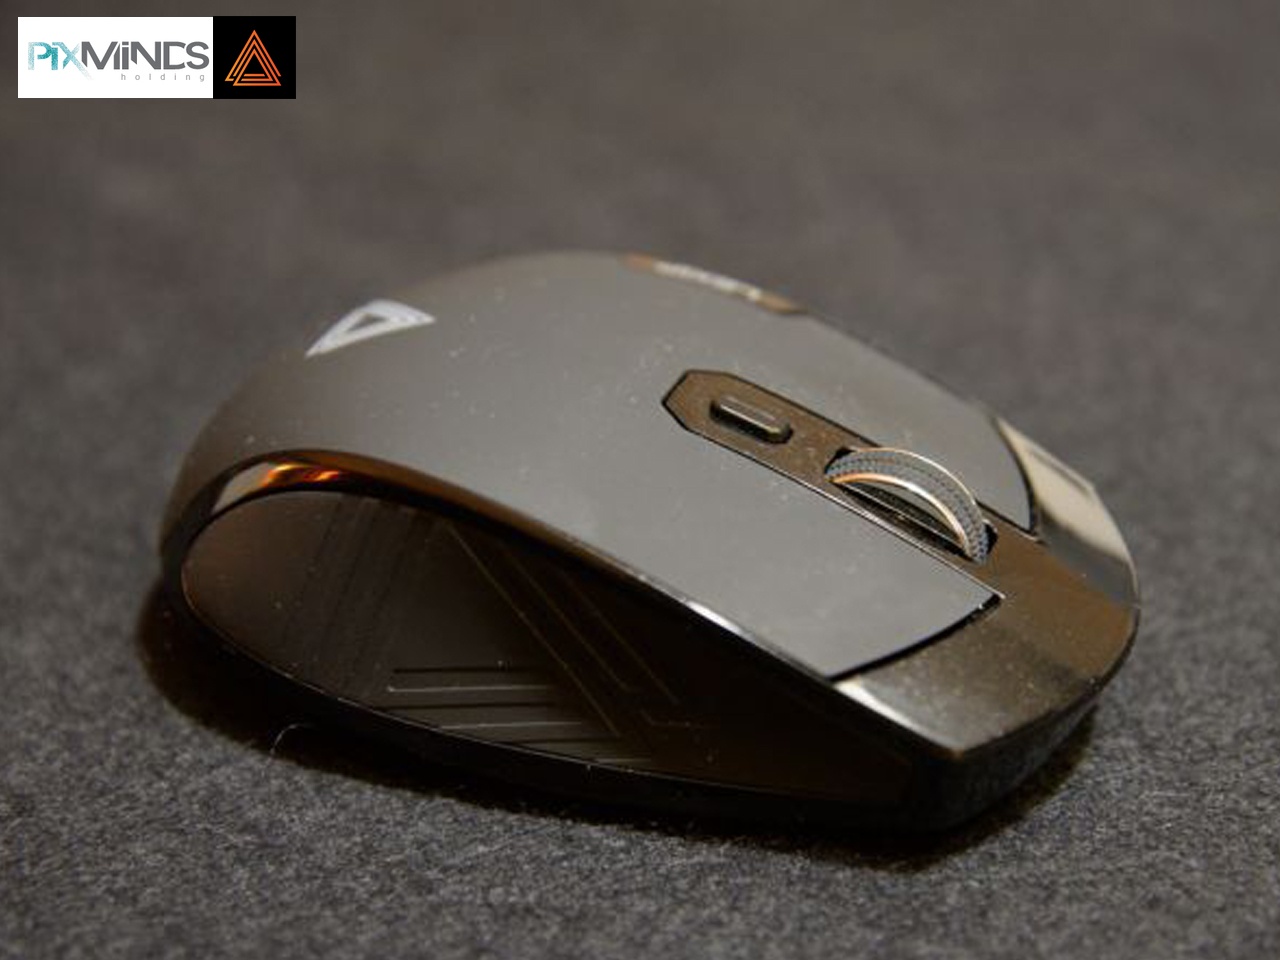 Lexip présente la souris gaming Made in France la plus innovante